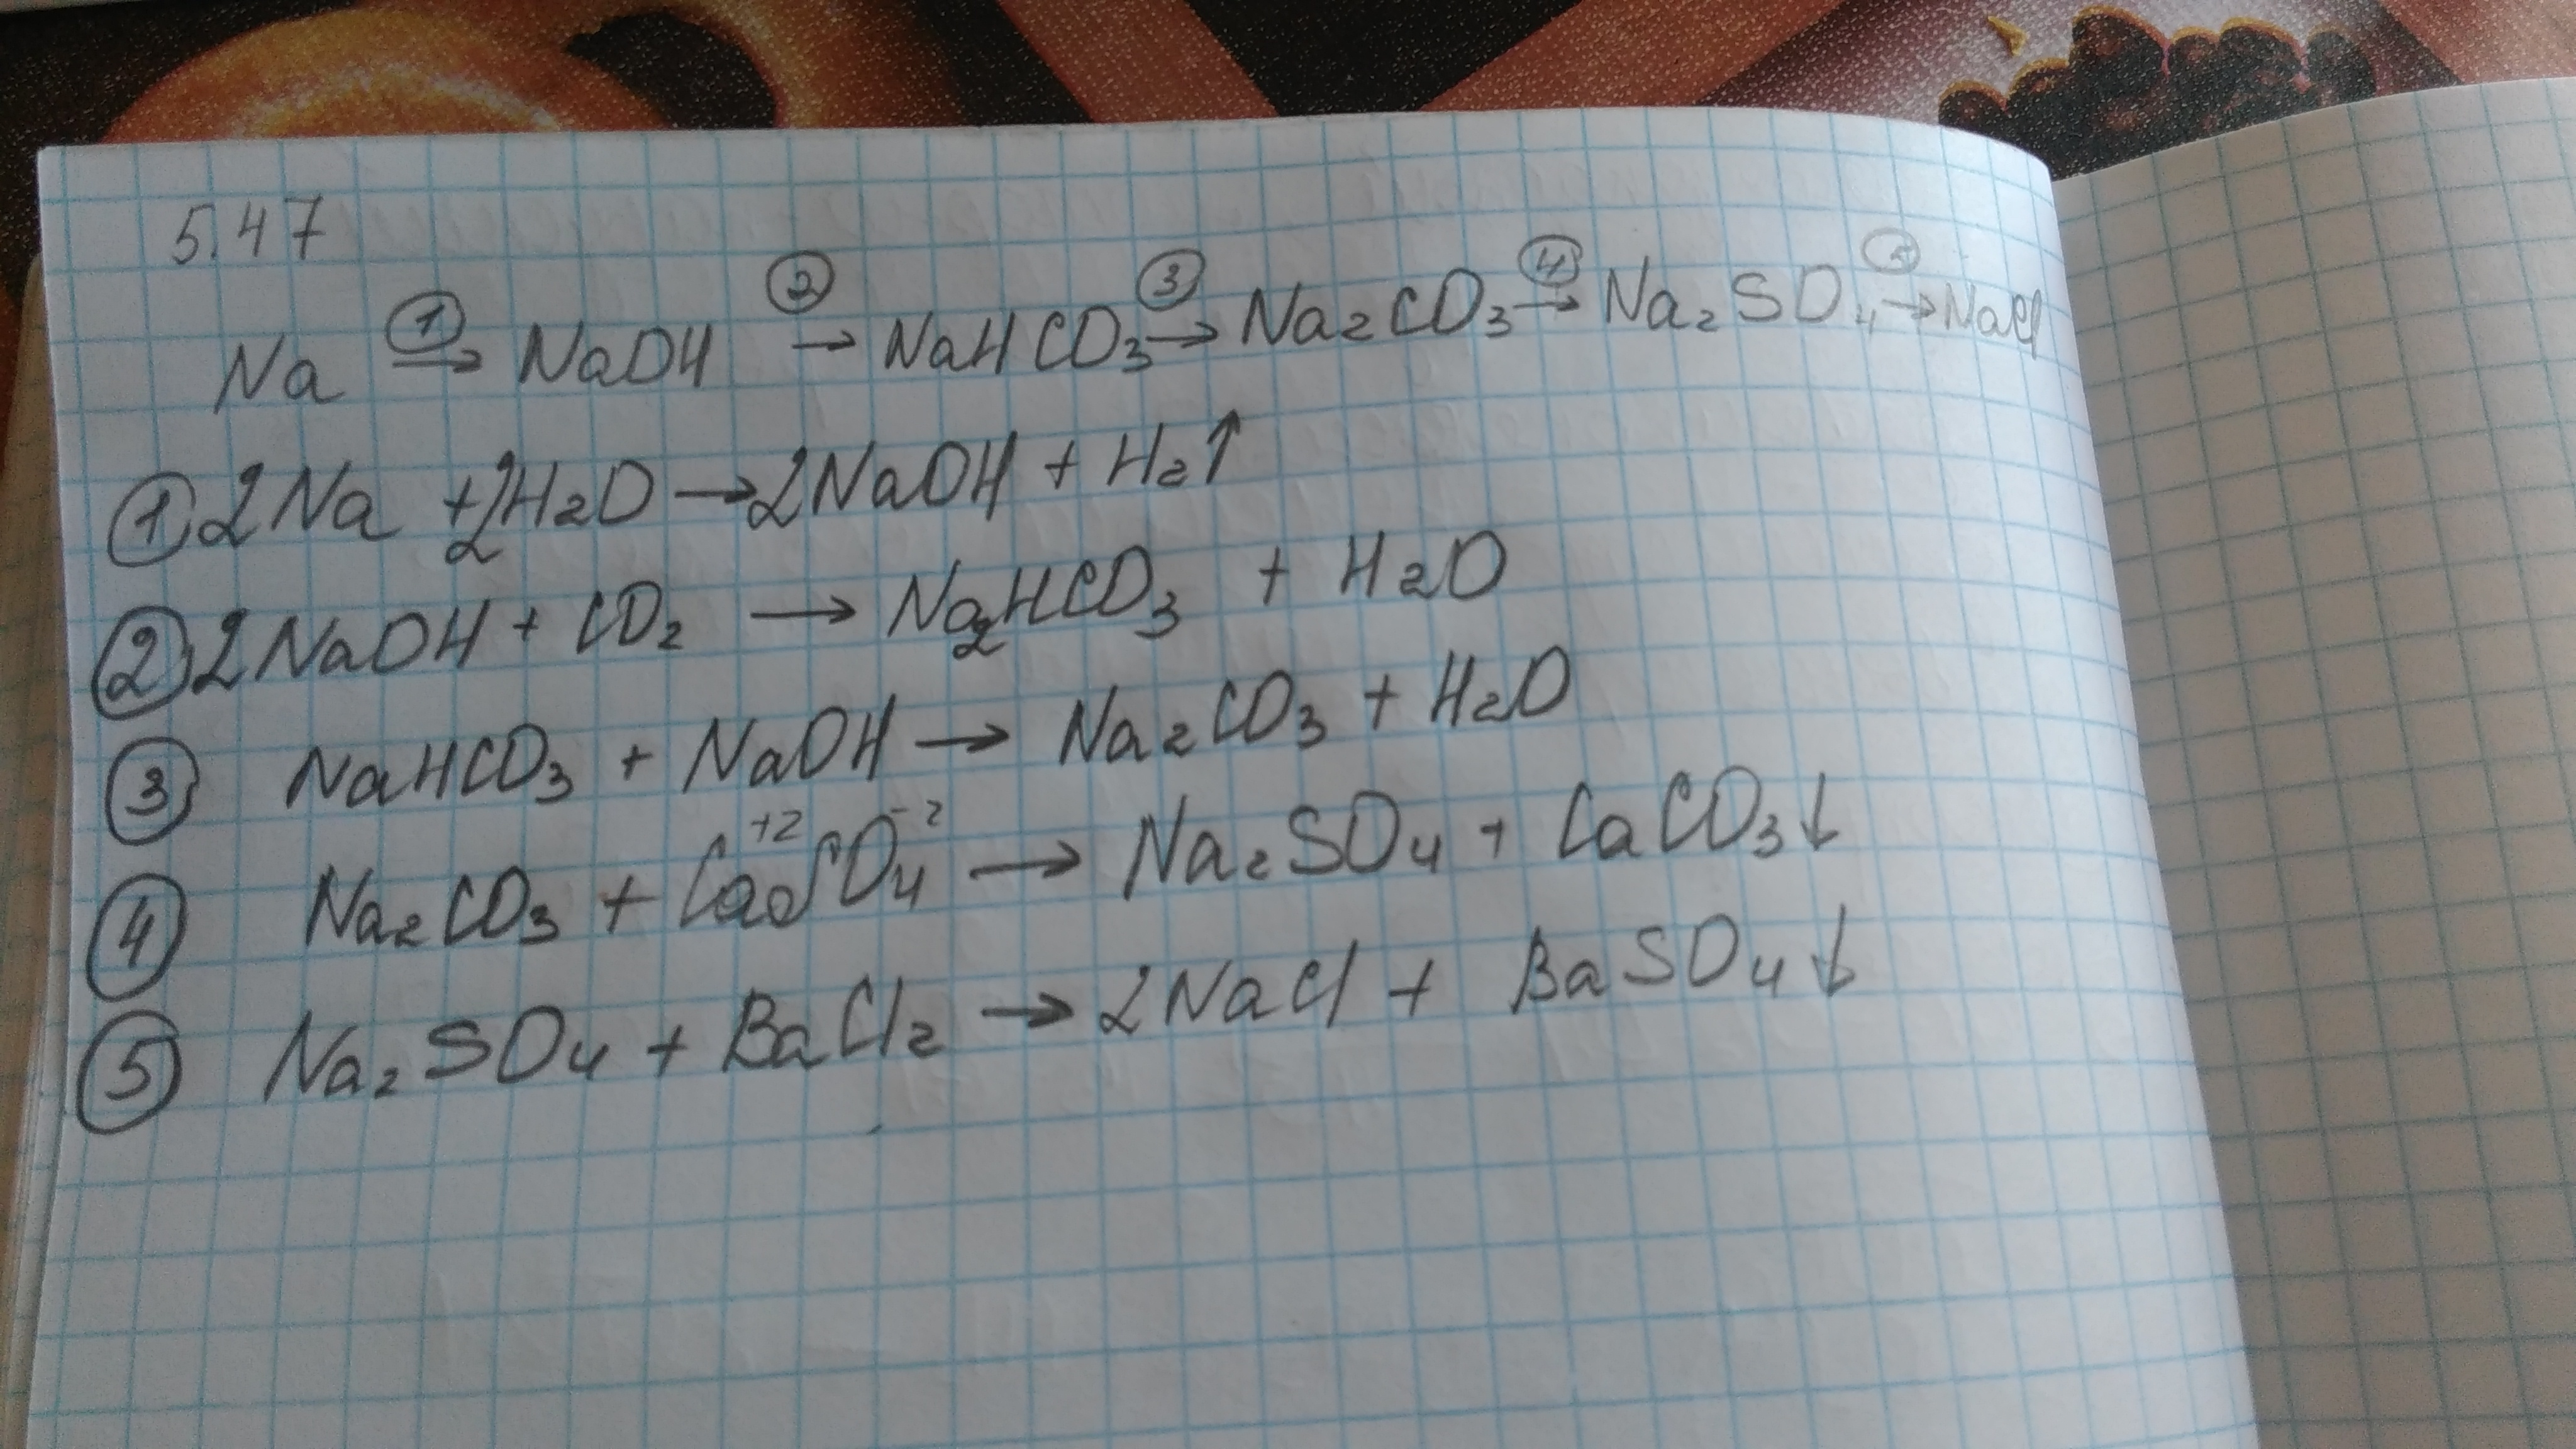 Bacl2 k2co3 h2o. Na2co3 bacl2. NAOH co2 nahco3. Nahco3 bacl2 ионное уравнение. Na2co3+ bacl2.